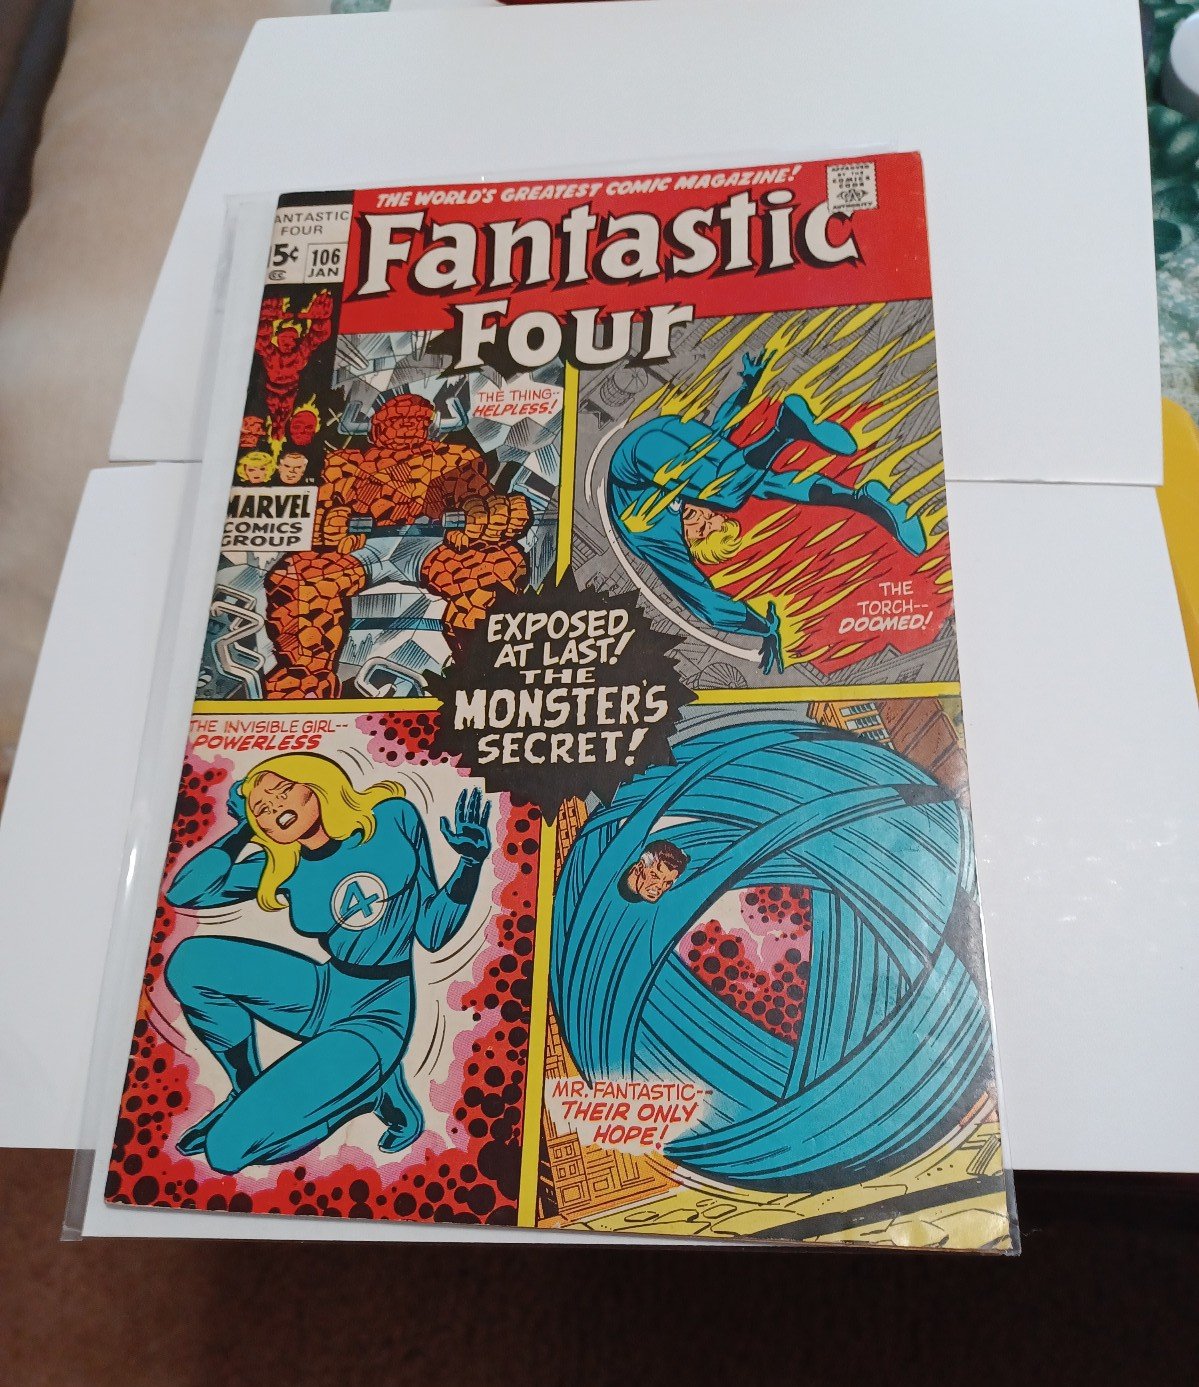 Fantastic Four #106 AGWJUcgks